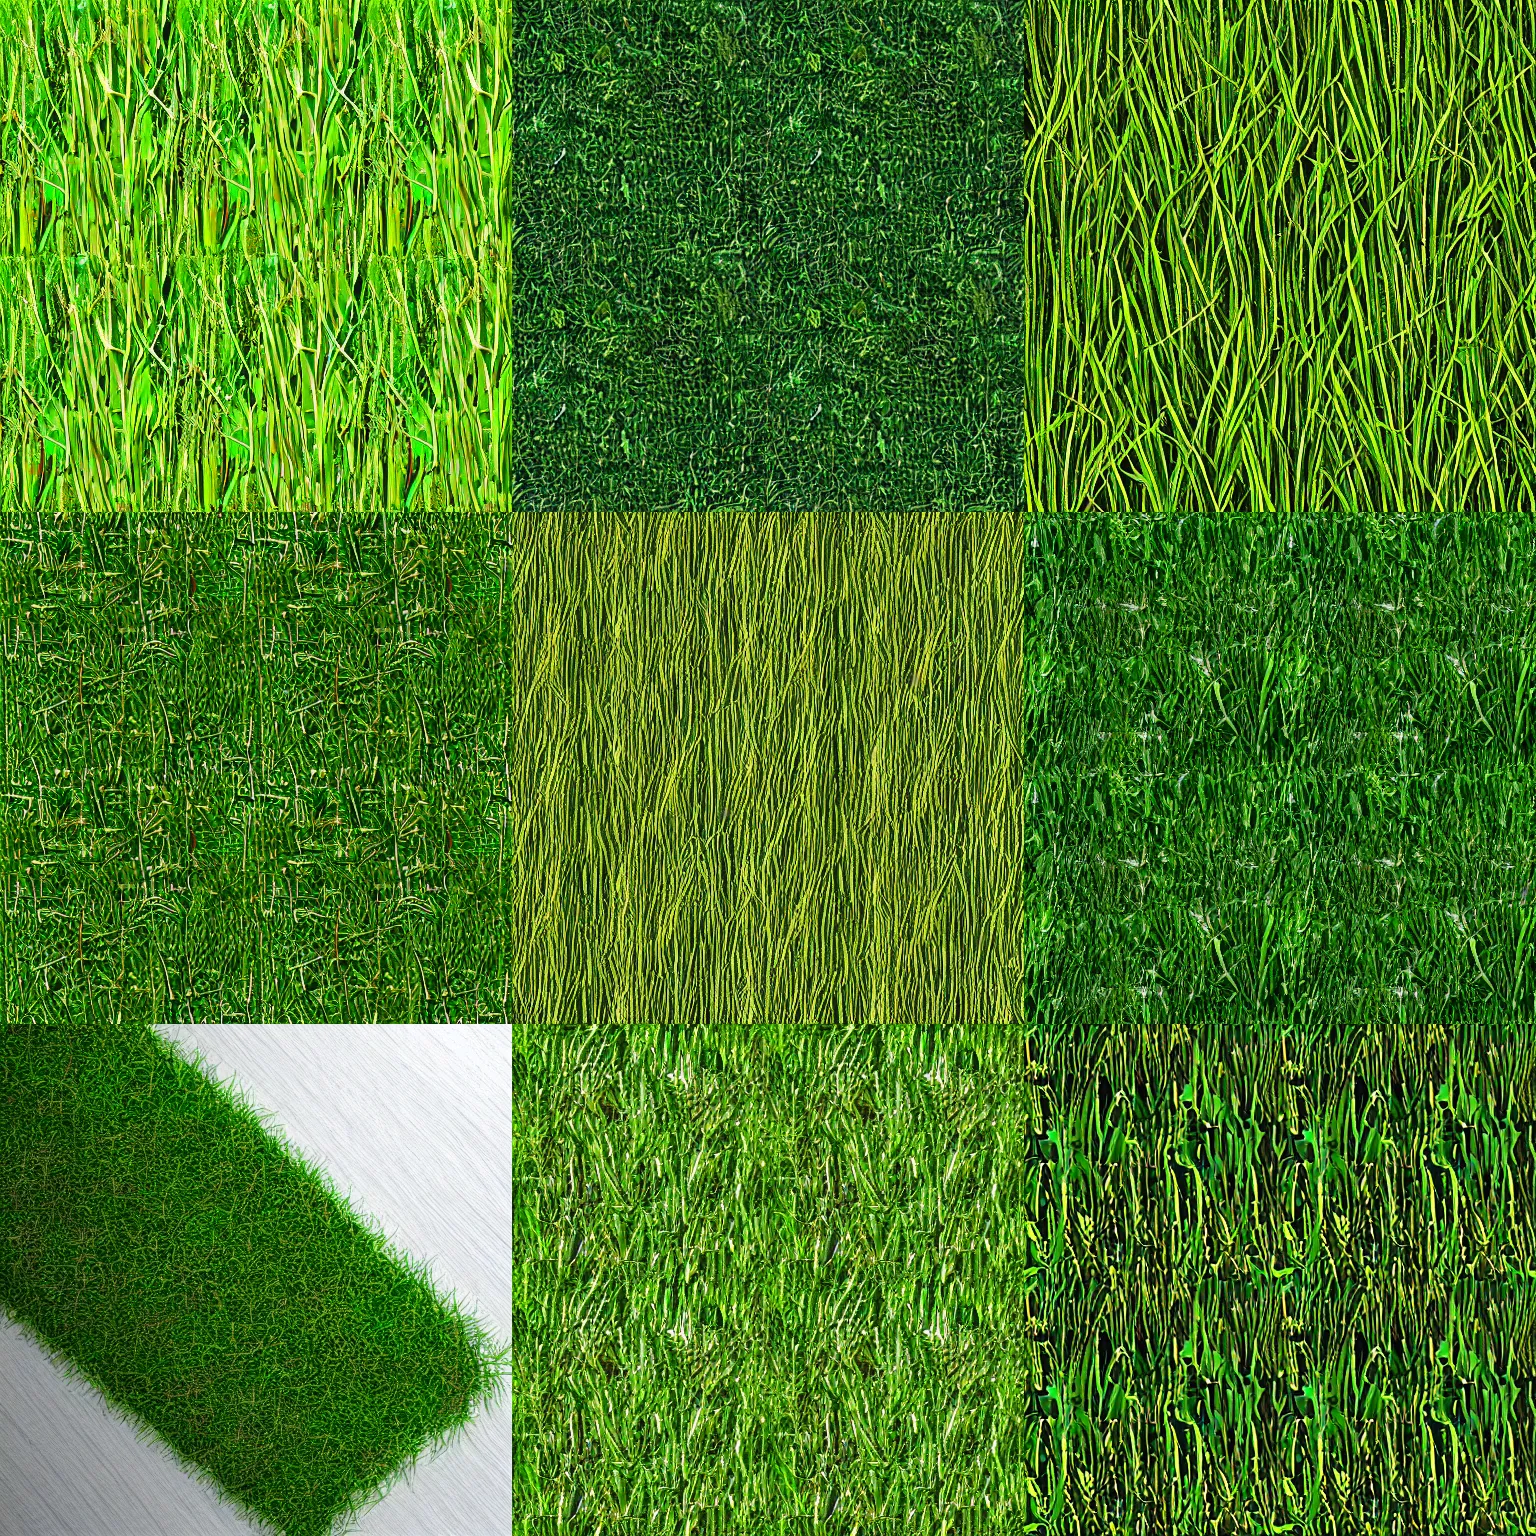 Prompt: Grass texture